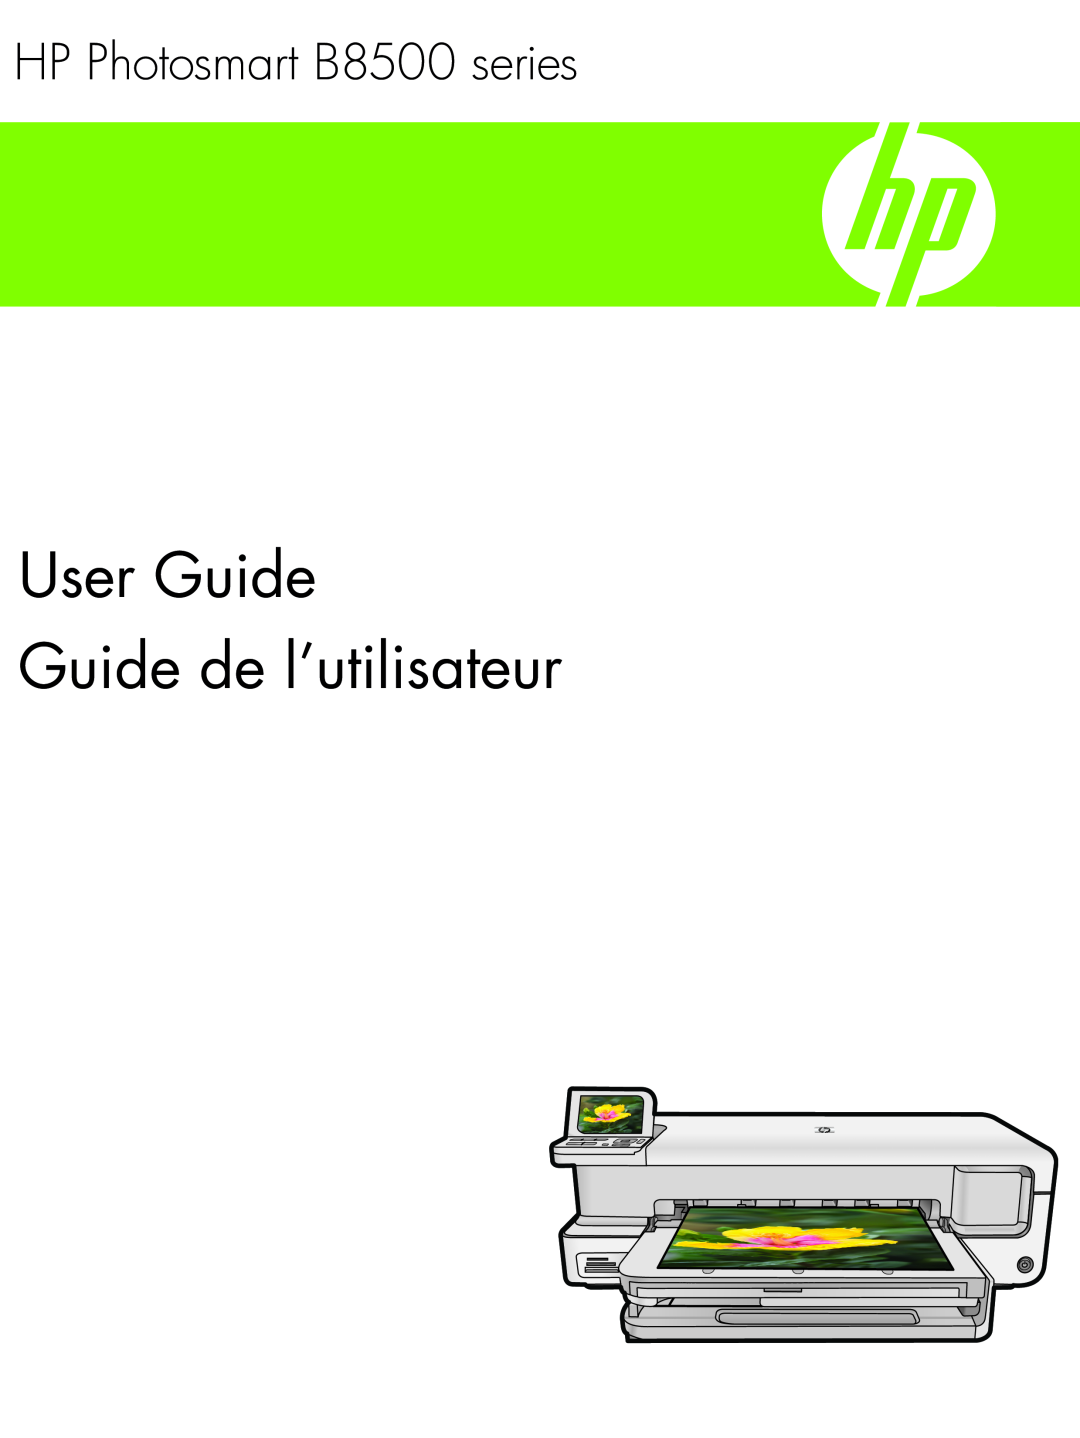 HP B8550 Photo CB981A#B1H manual User Guide Guide de l’utilisateur, HP Photosmart B8500 series 